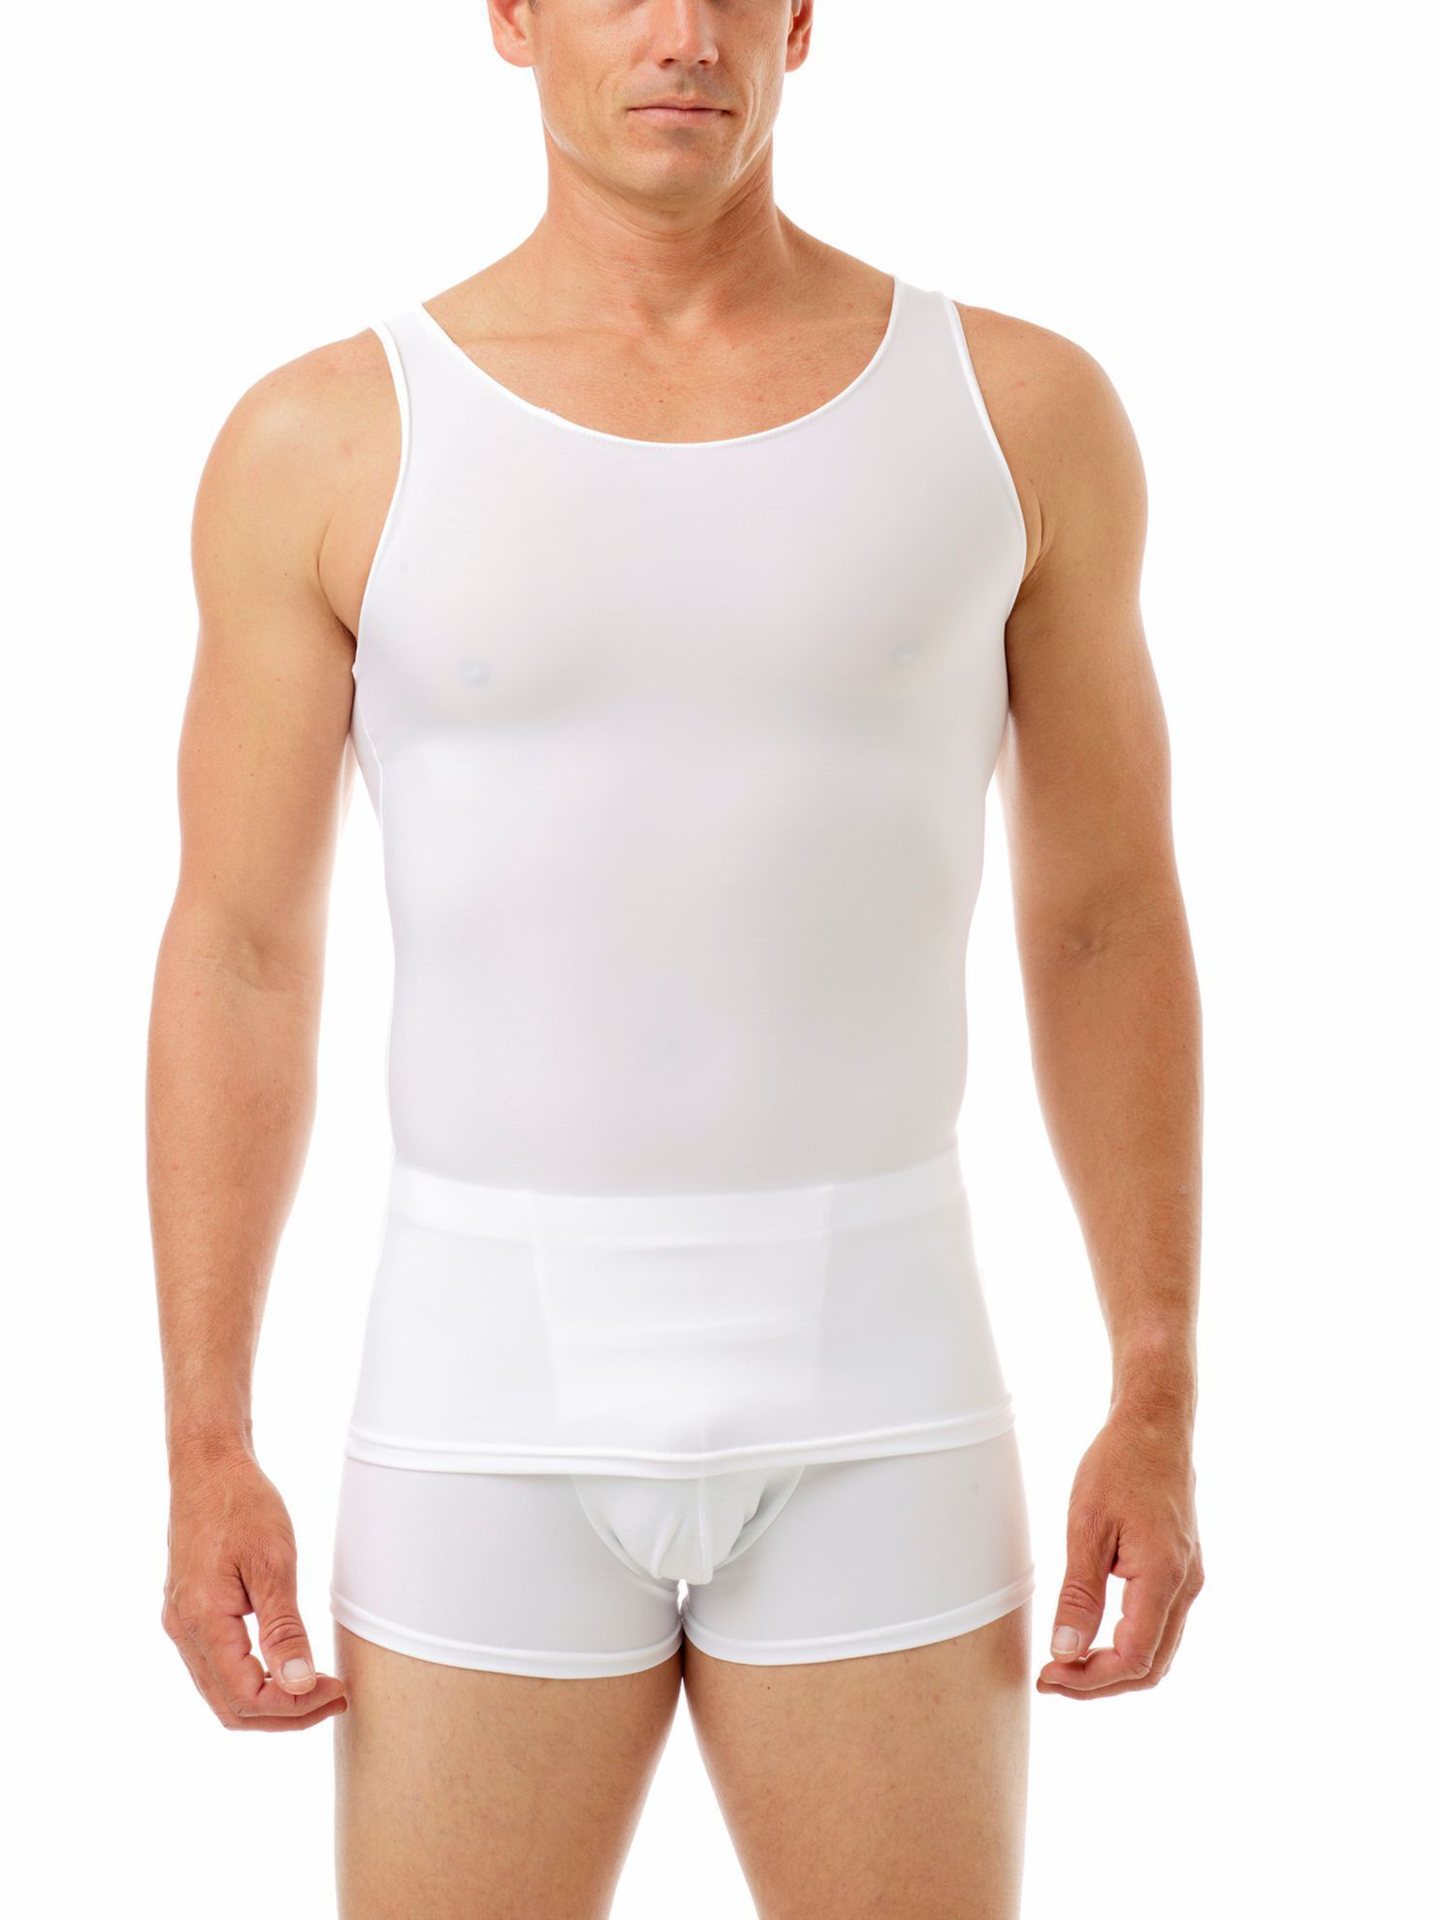 compression garments for men